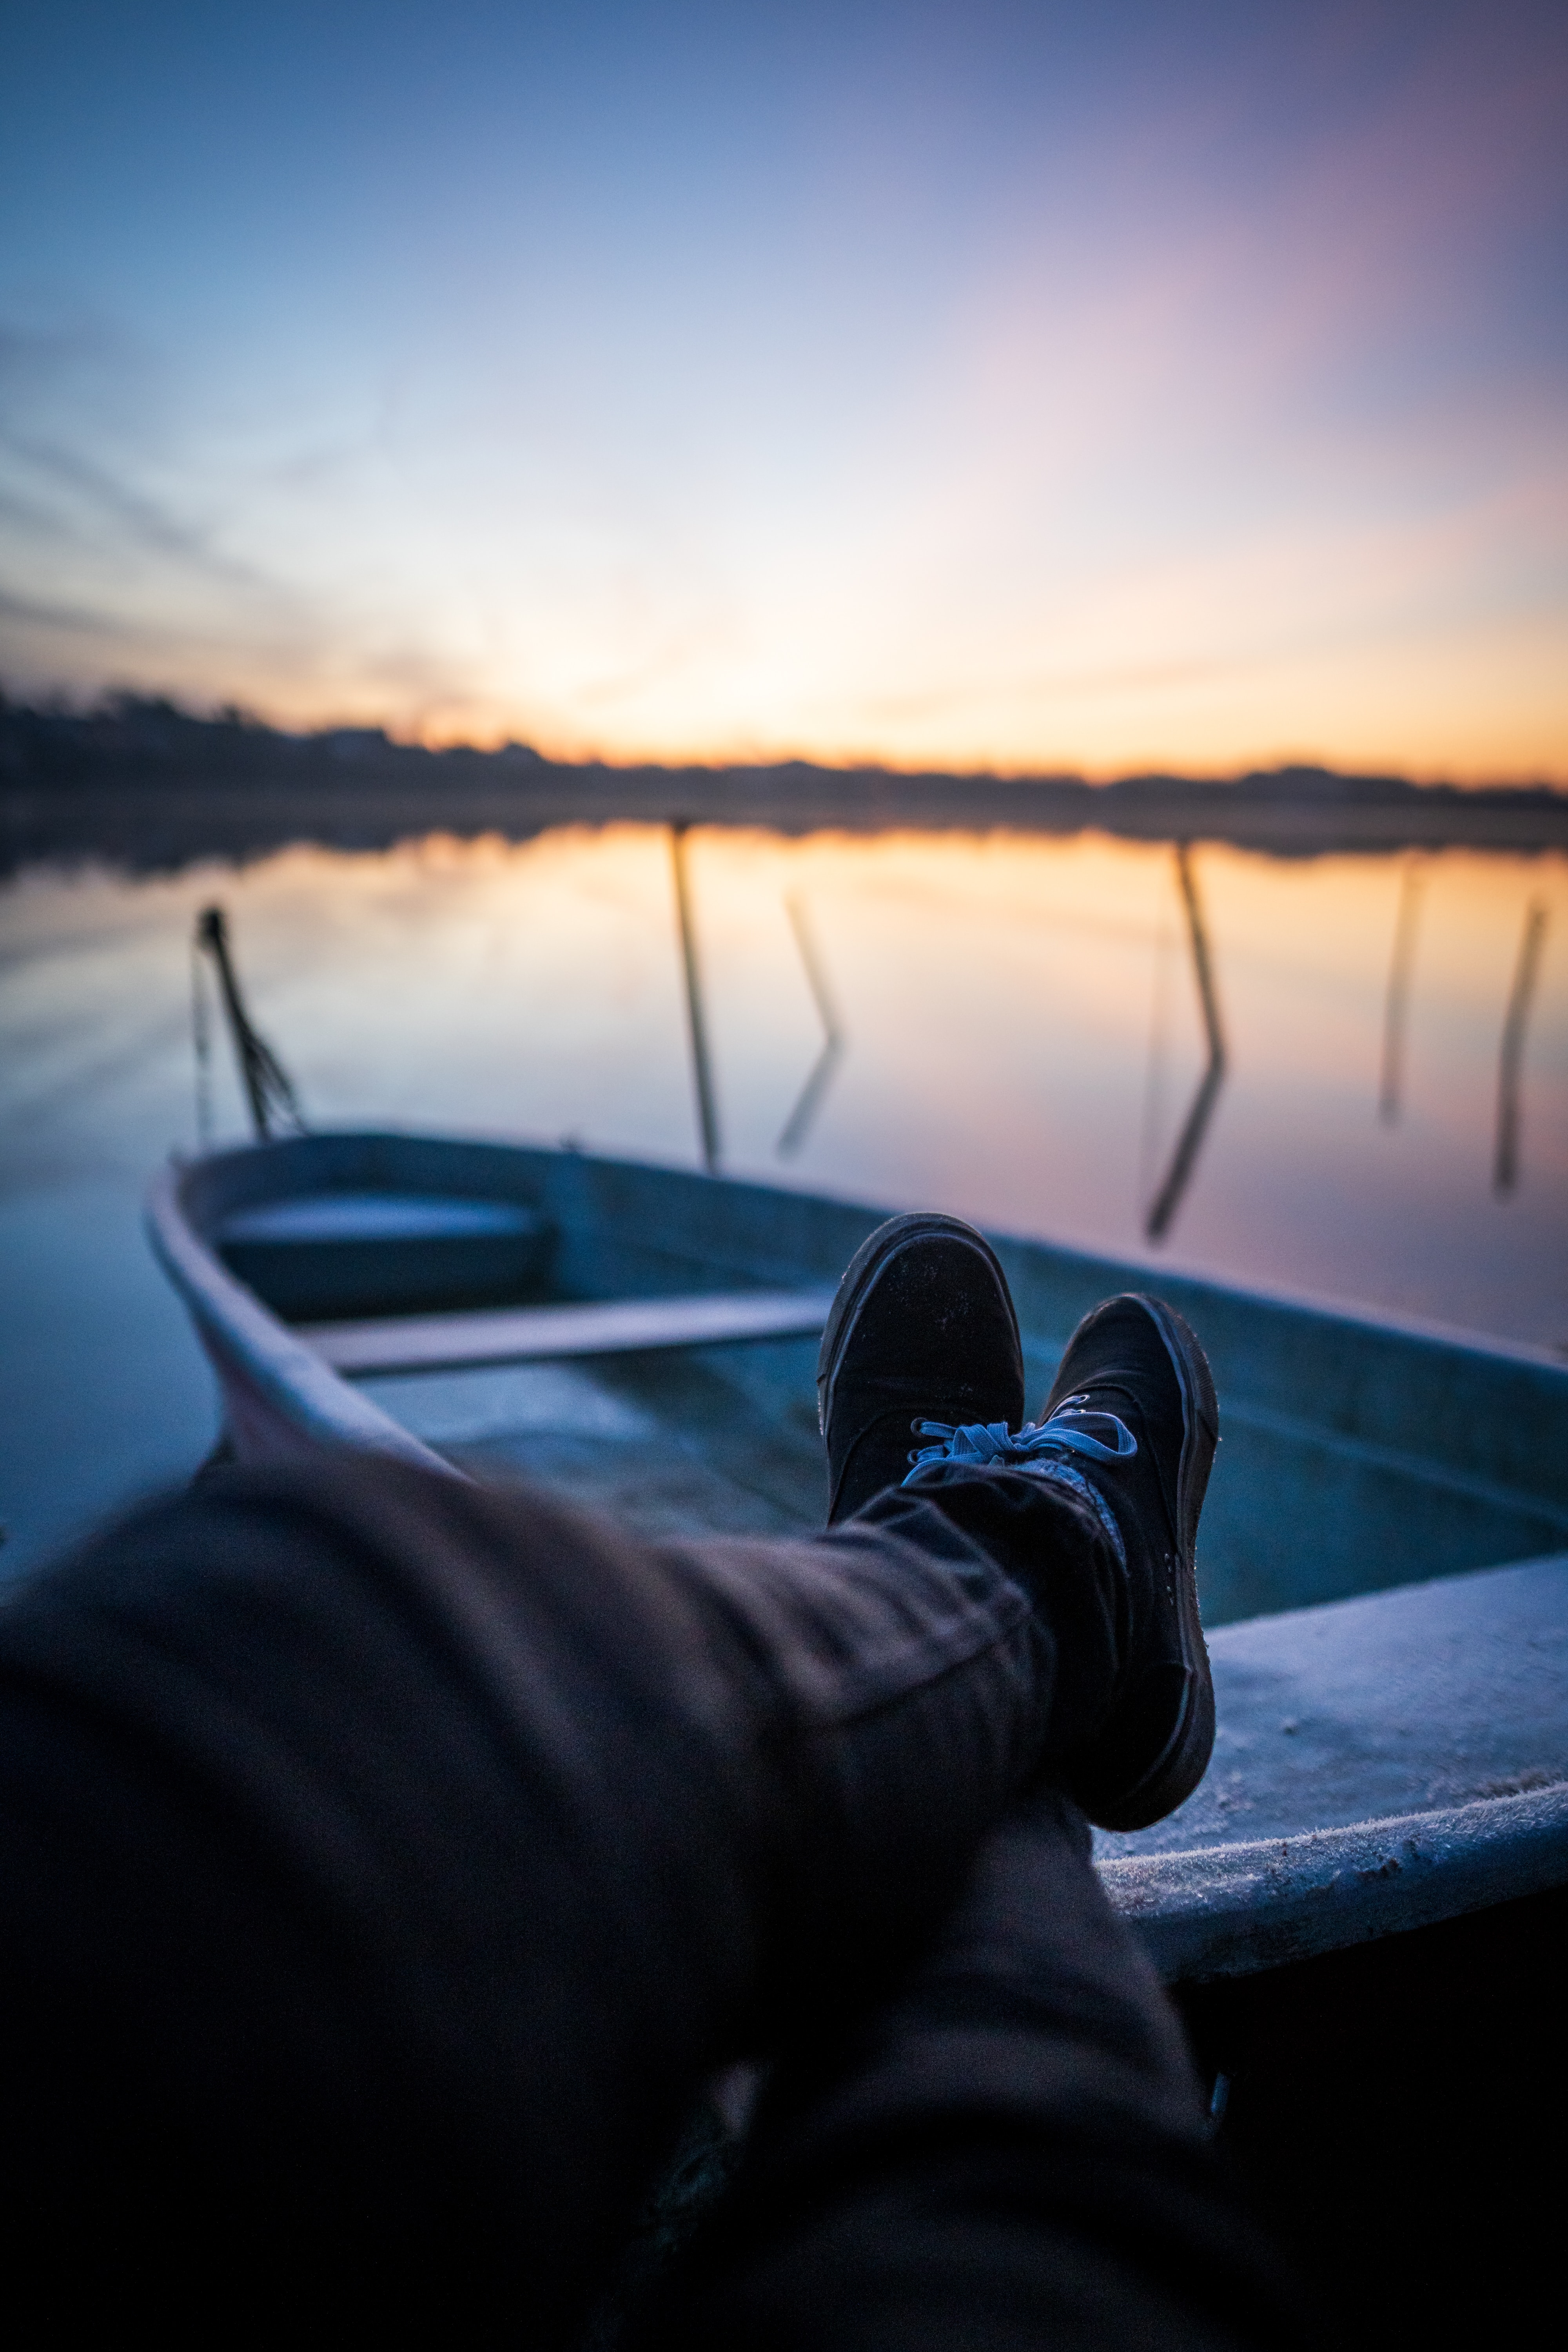 desktop Images twilight, lake, miscellanea, miscellaneous, legs, dusk, relaxation, rest, boat